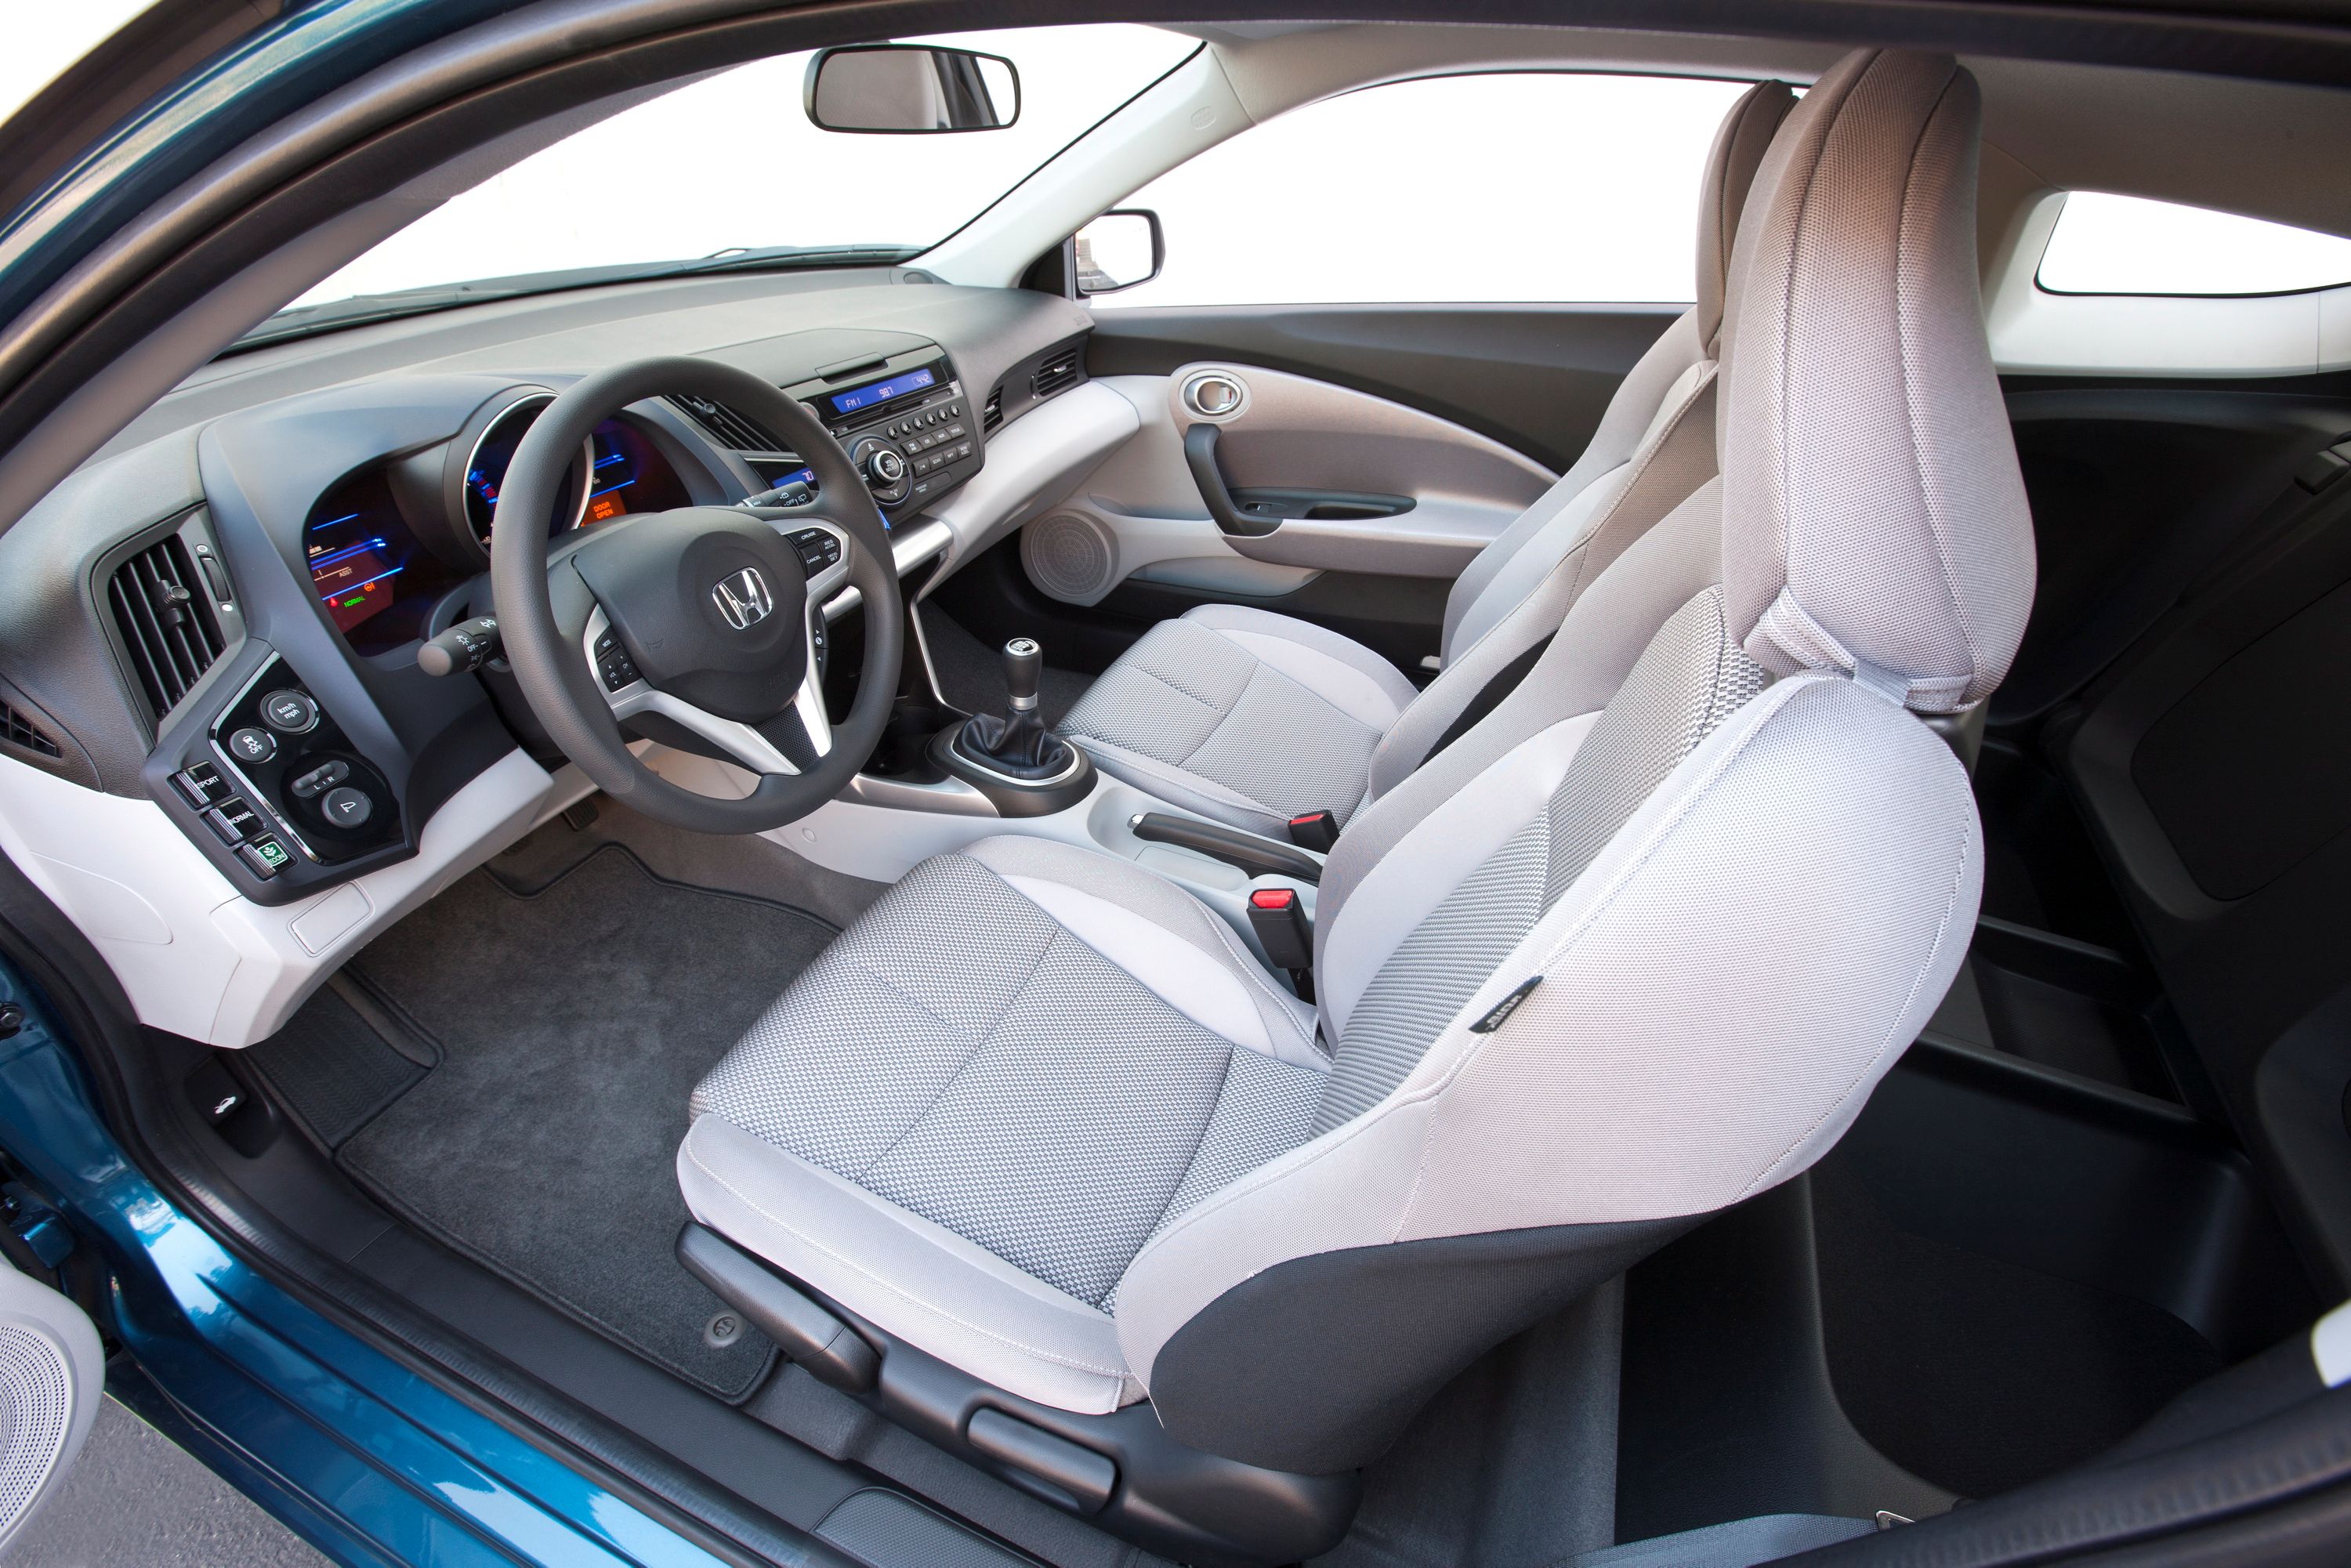 Honda CR-Z Interior & Exterior Images - CR-Z Pictures